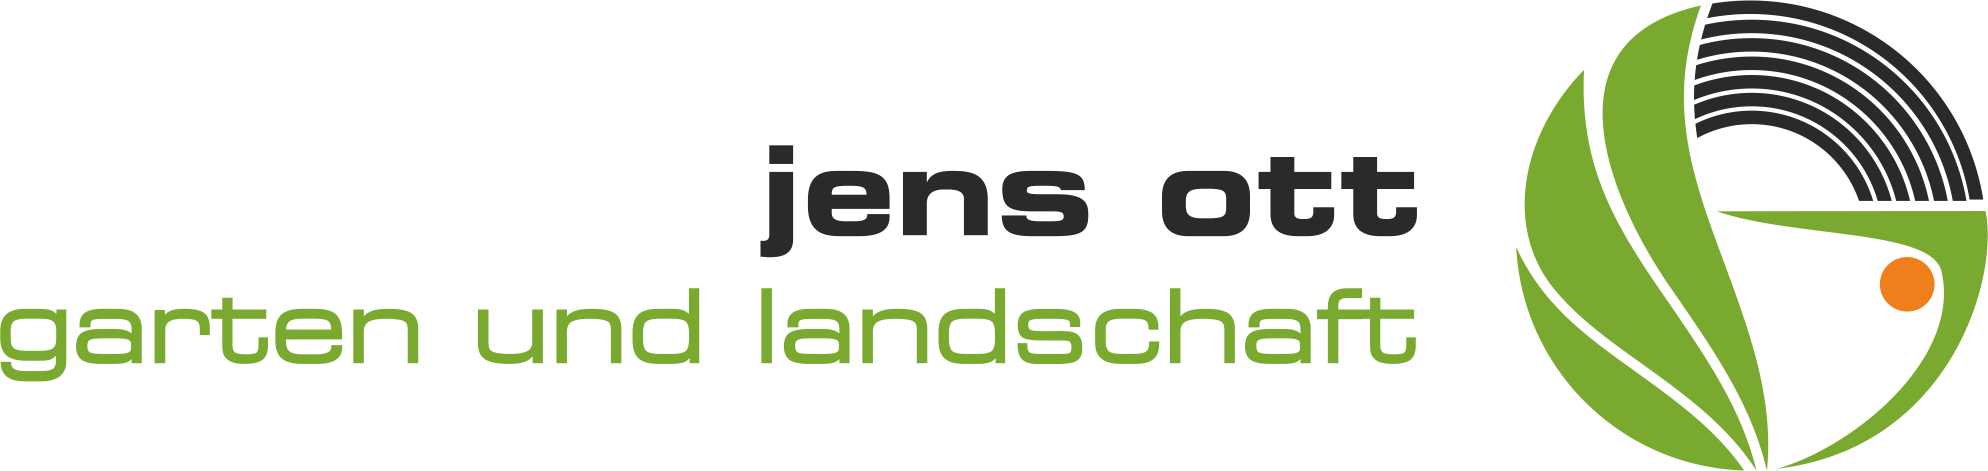 ott_jens_logo_redesign_rgb_0614